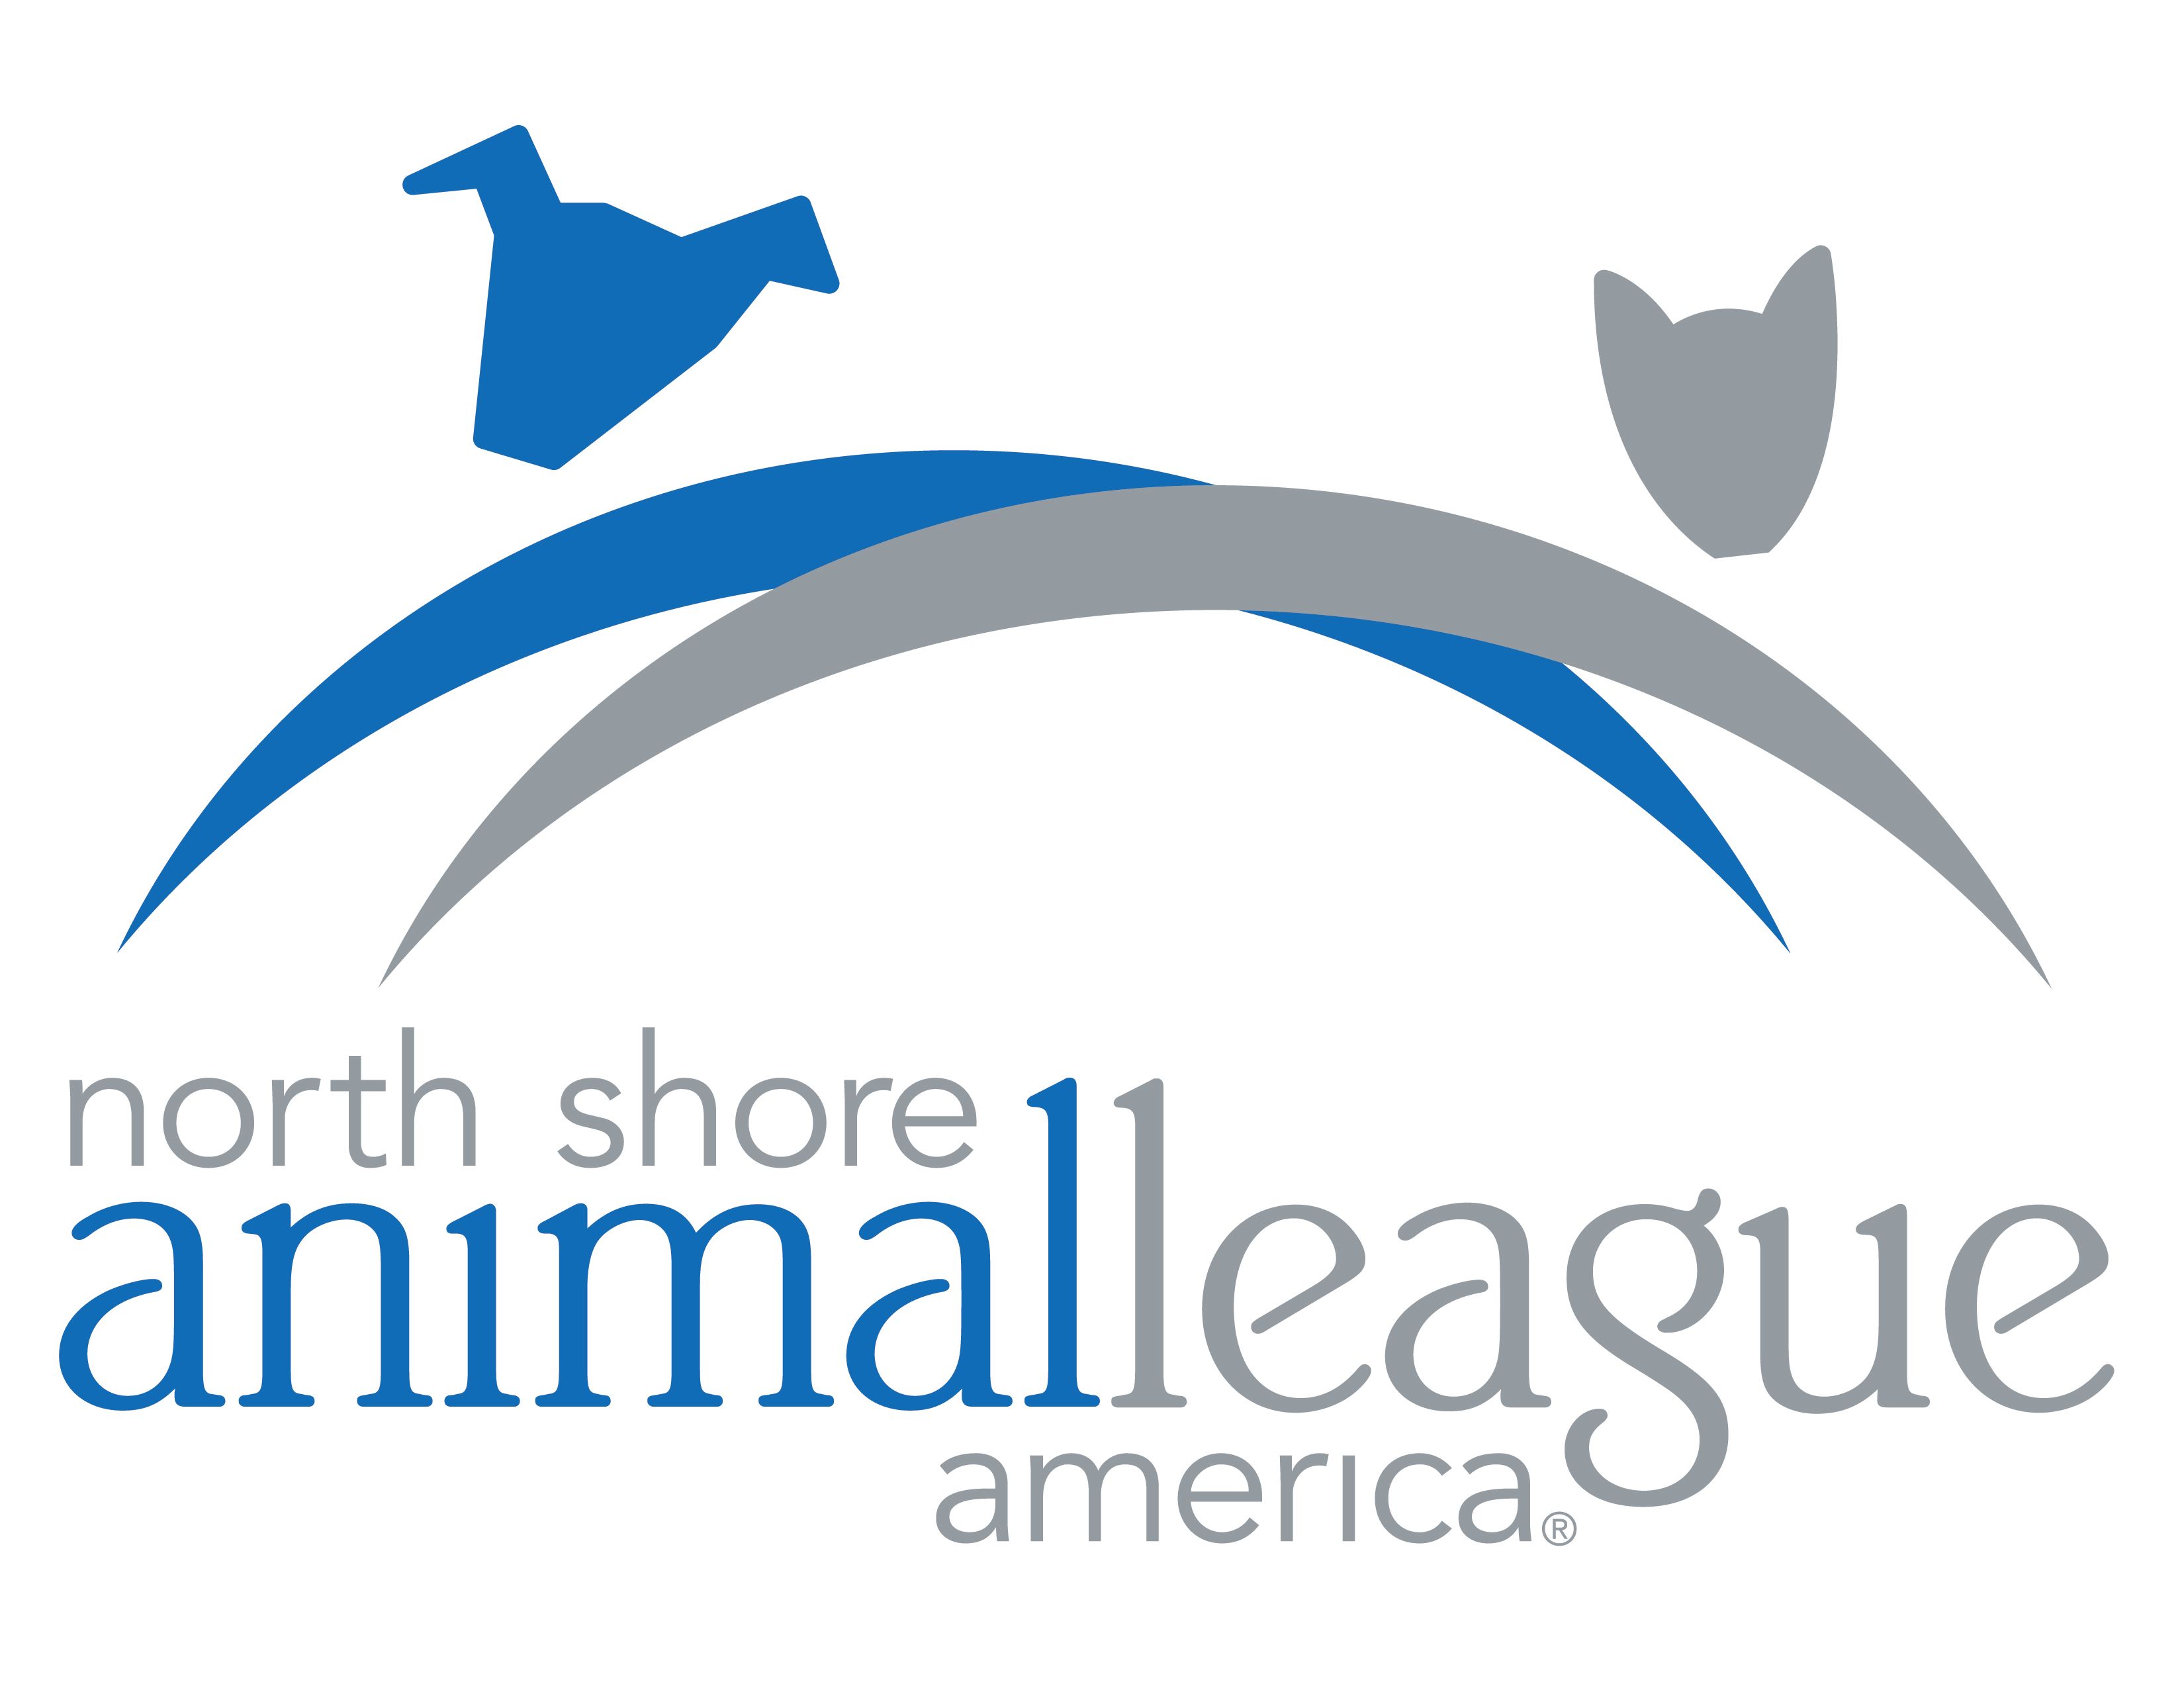 North Shore Animal League America INC